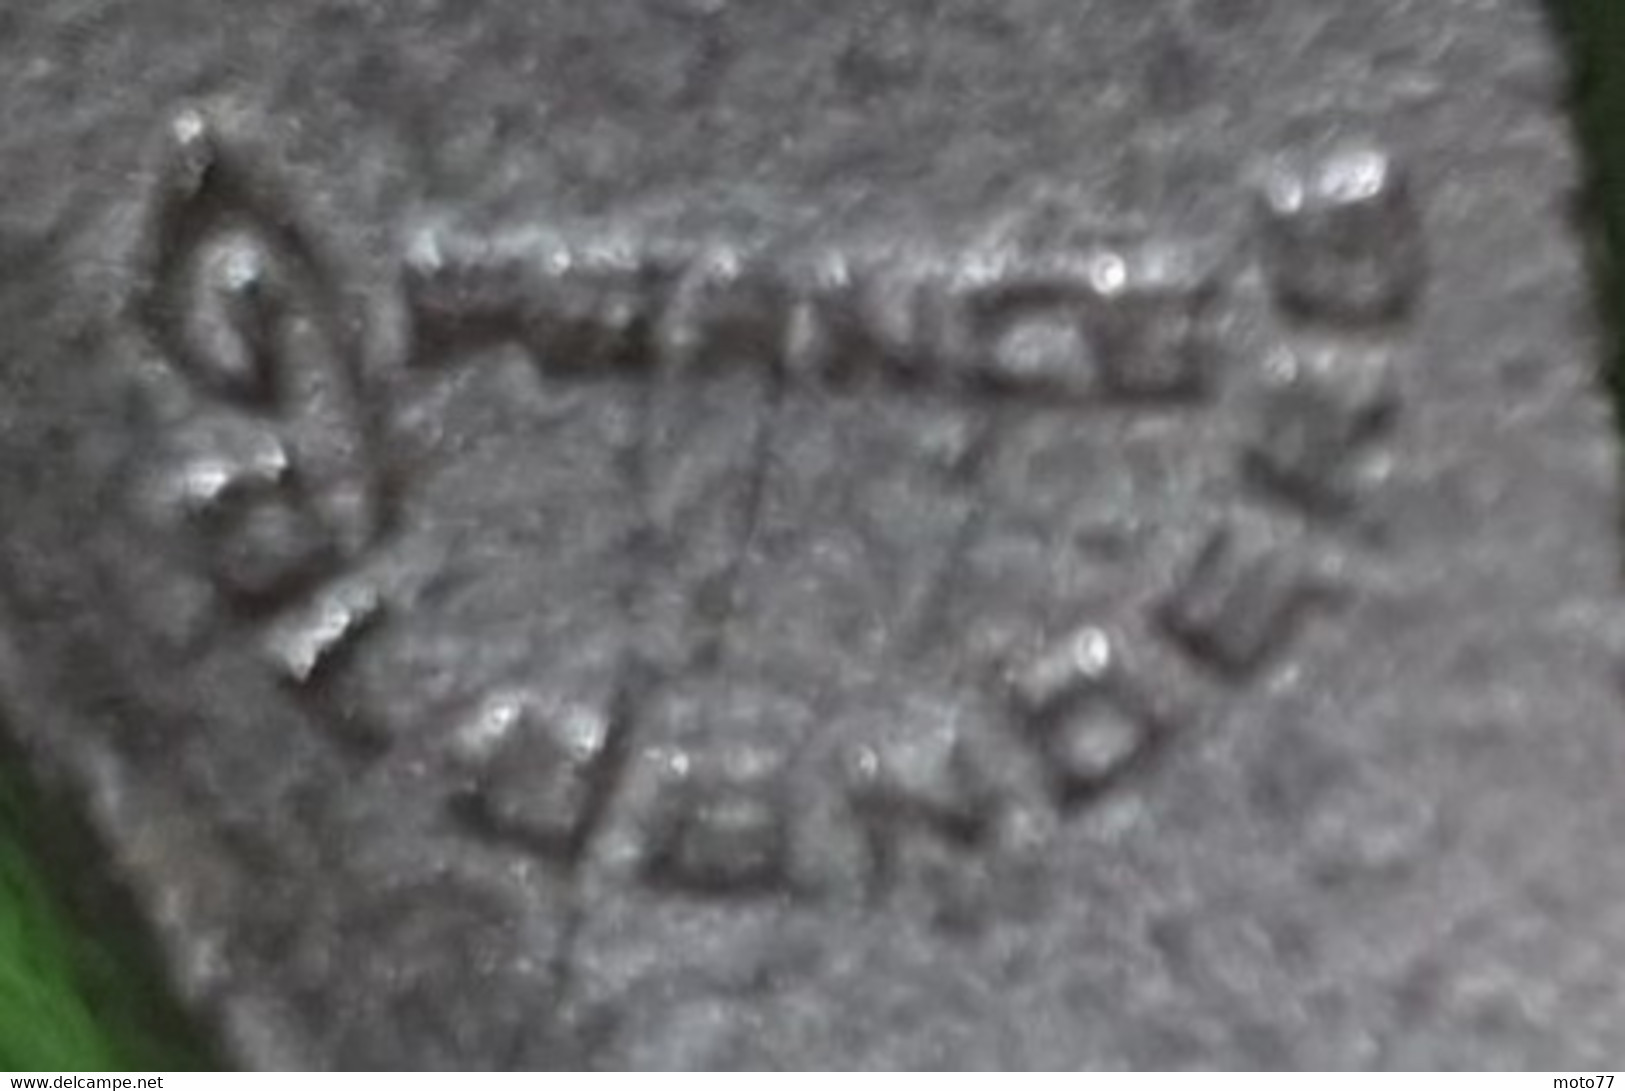 Ancien OUTIL spécial - grosse TENAILLE - Goldenberg France - métal - "Neuf de stock" - vers 1980